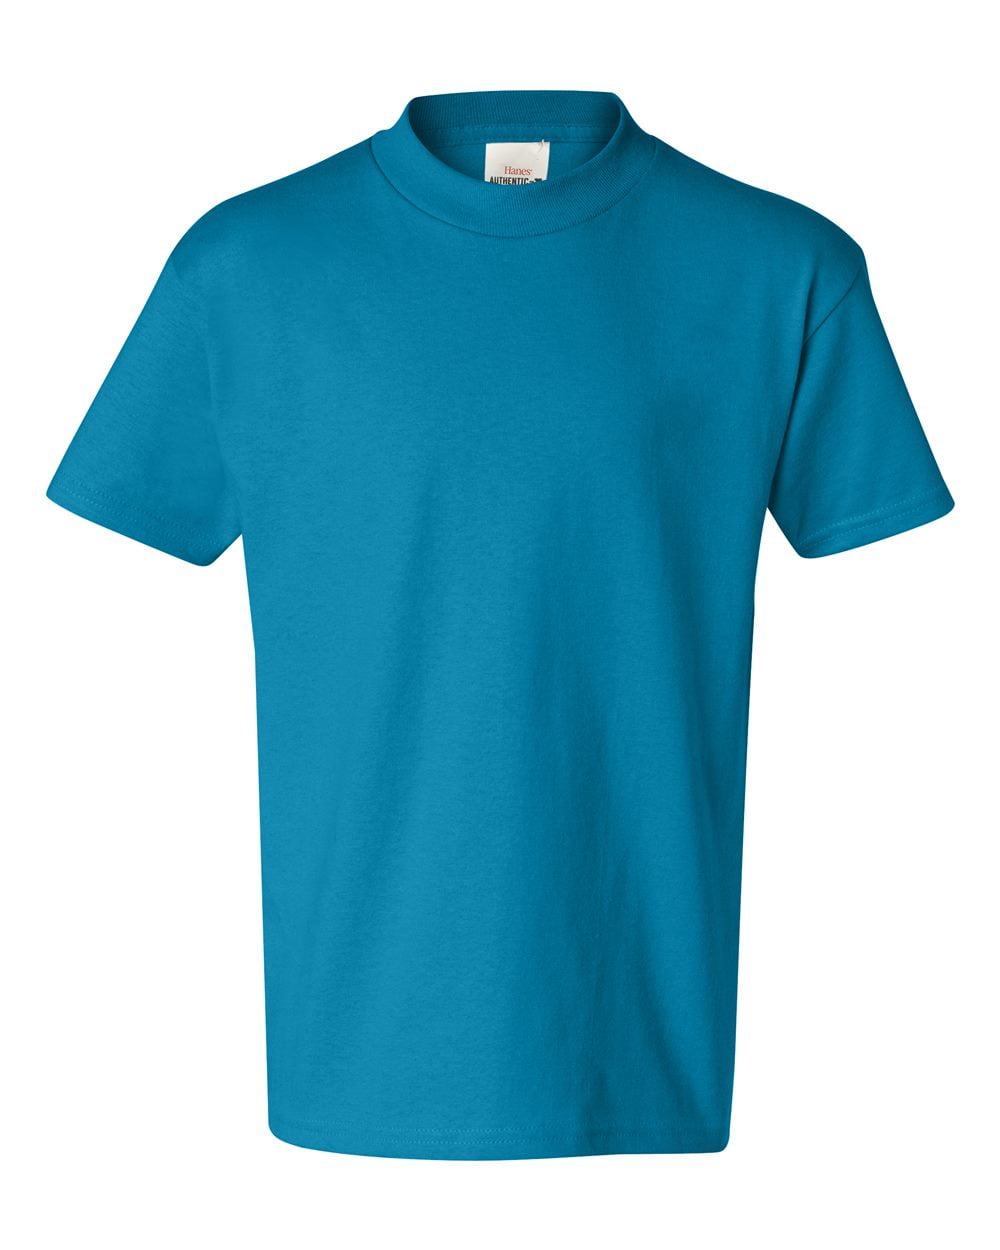 Boys' Tagless Short Sleeve T-Shirt - Walmart.com